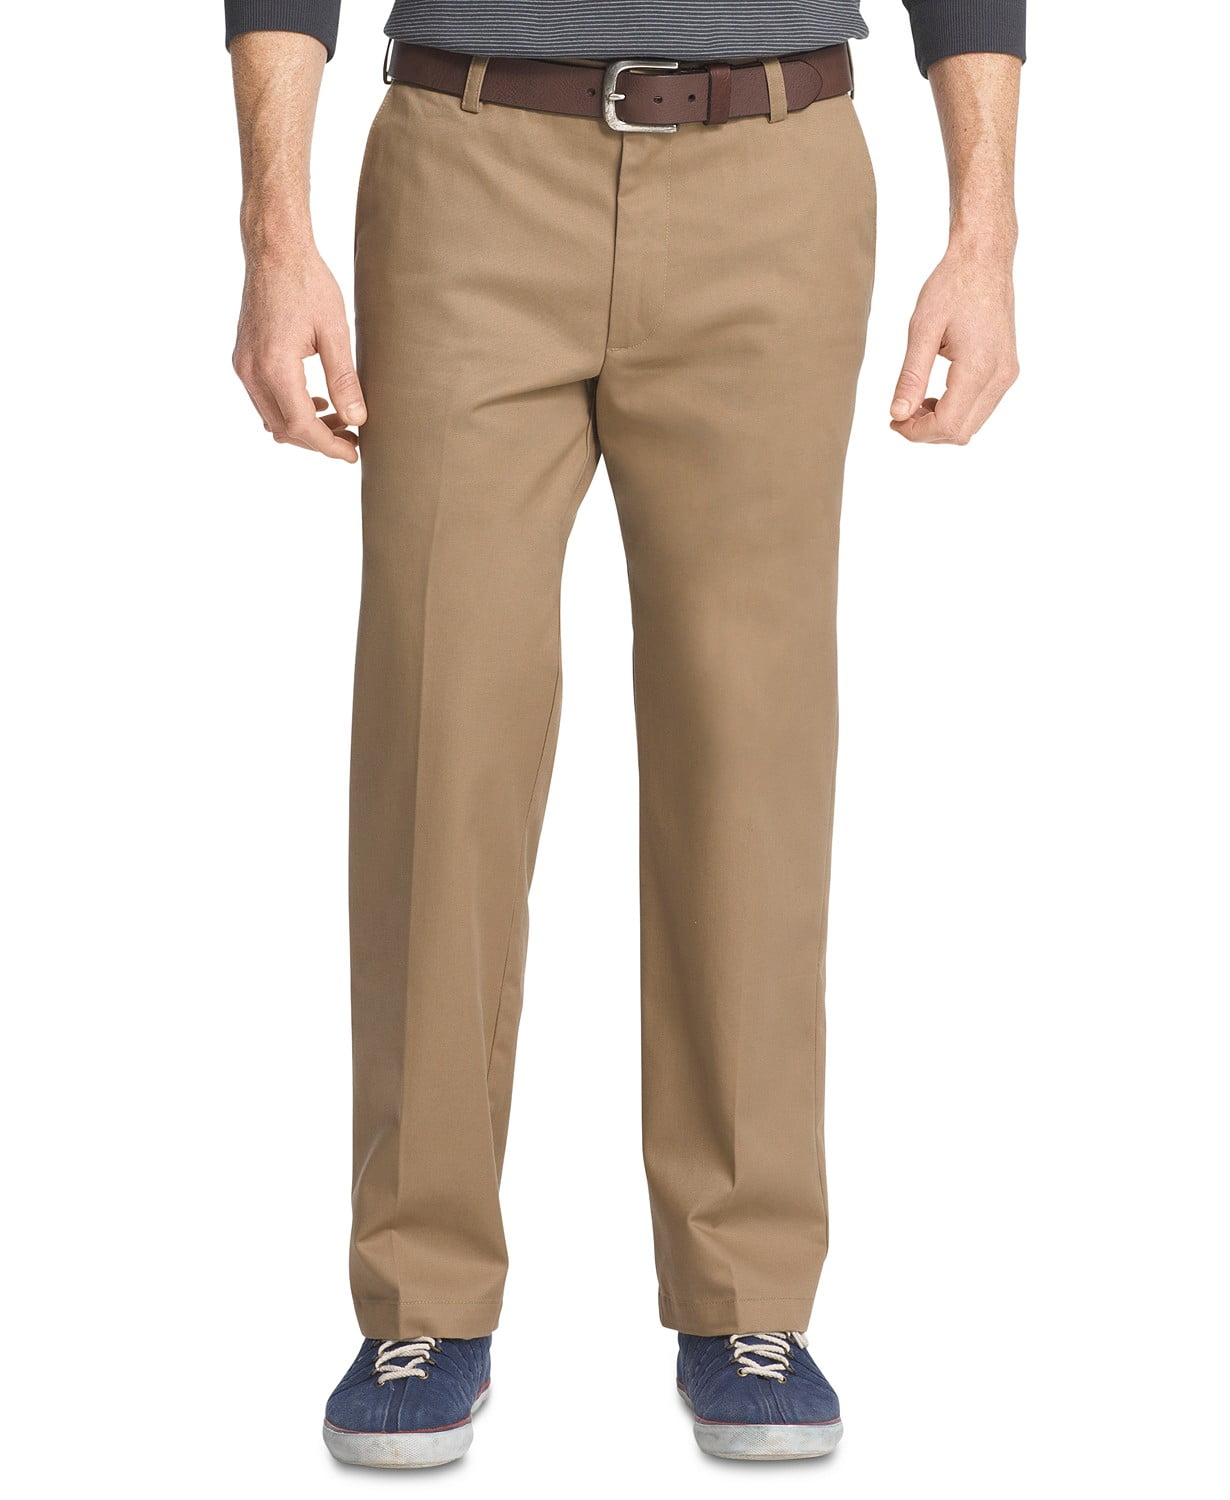 IZOD Men's American Chino Straight Fit Flat Front Pant - Walmart.com